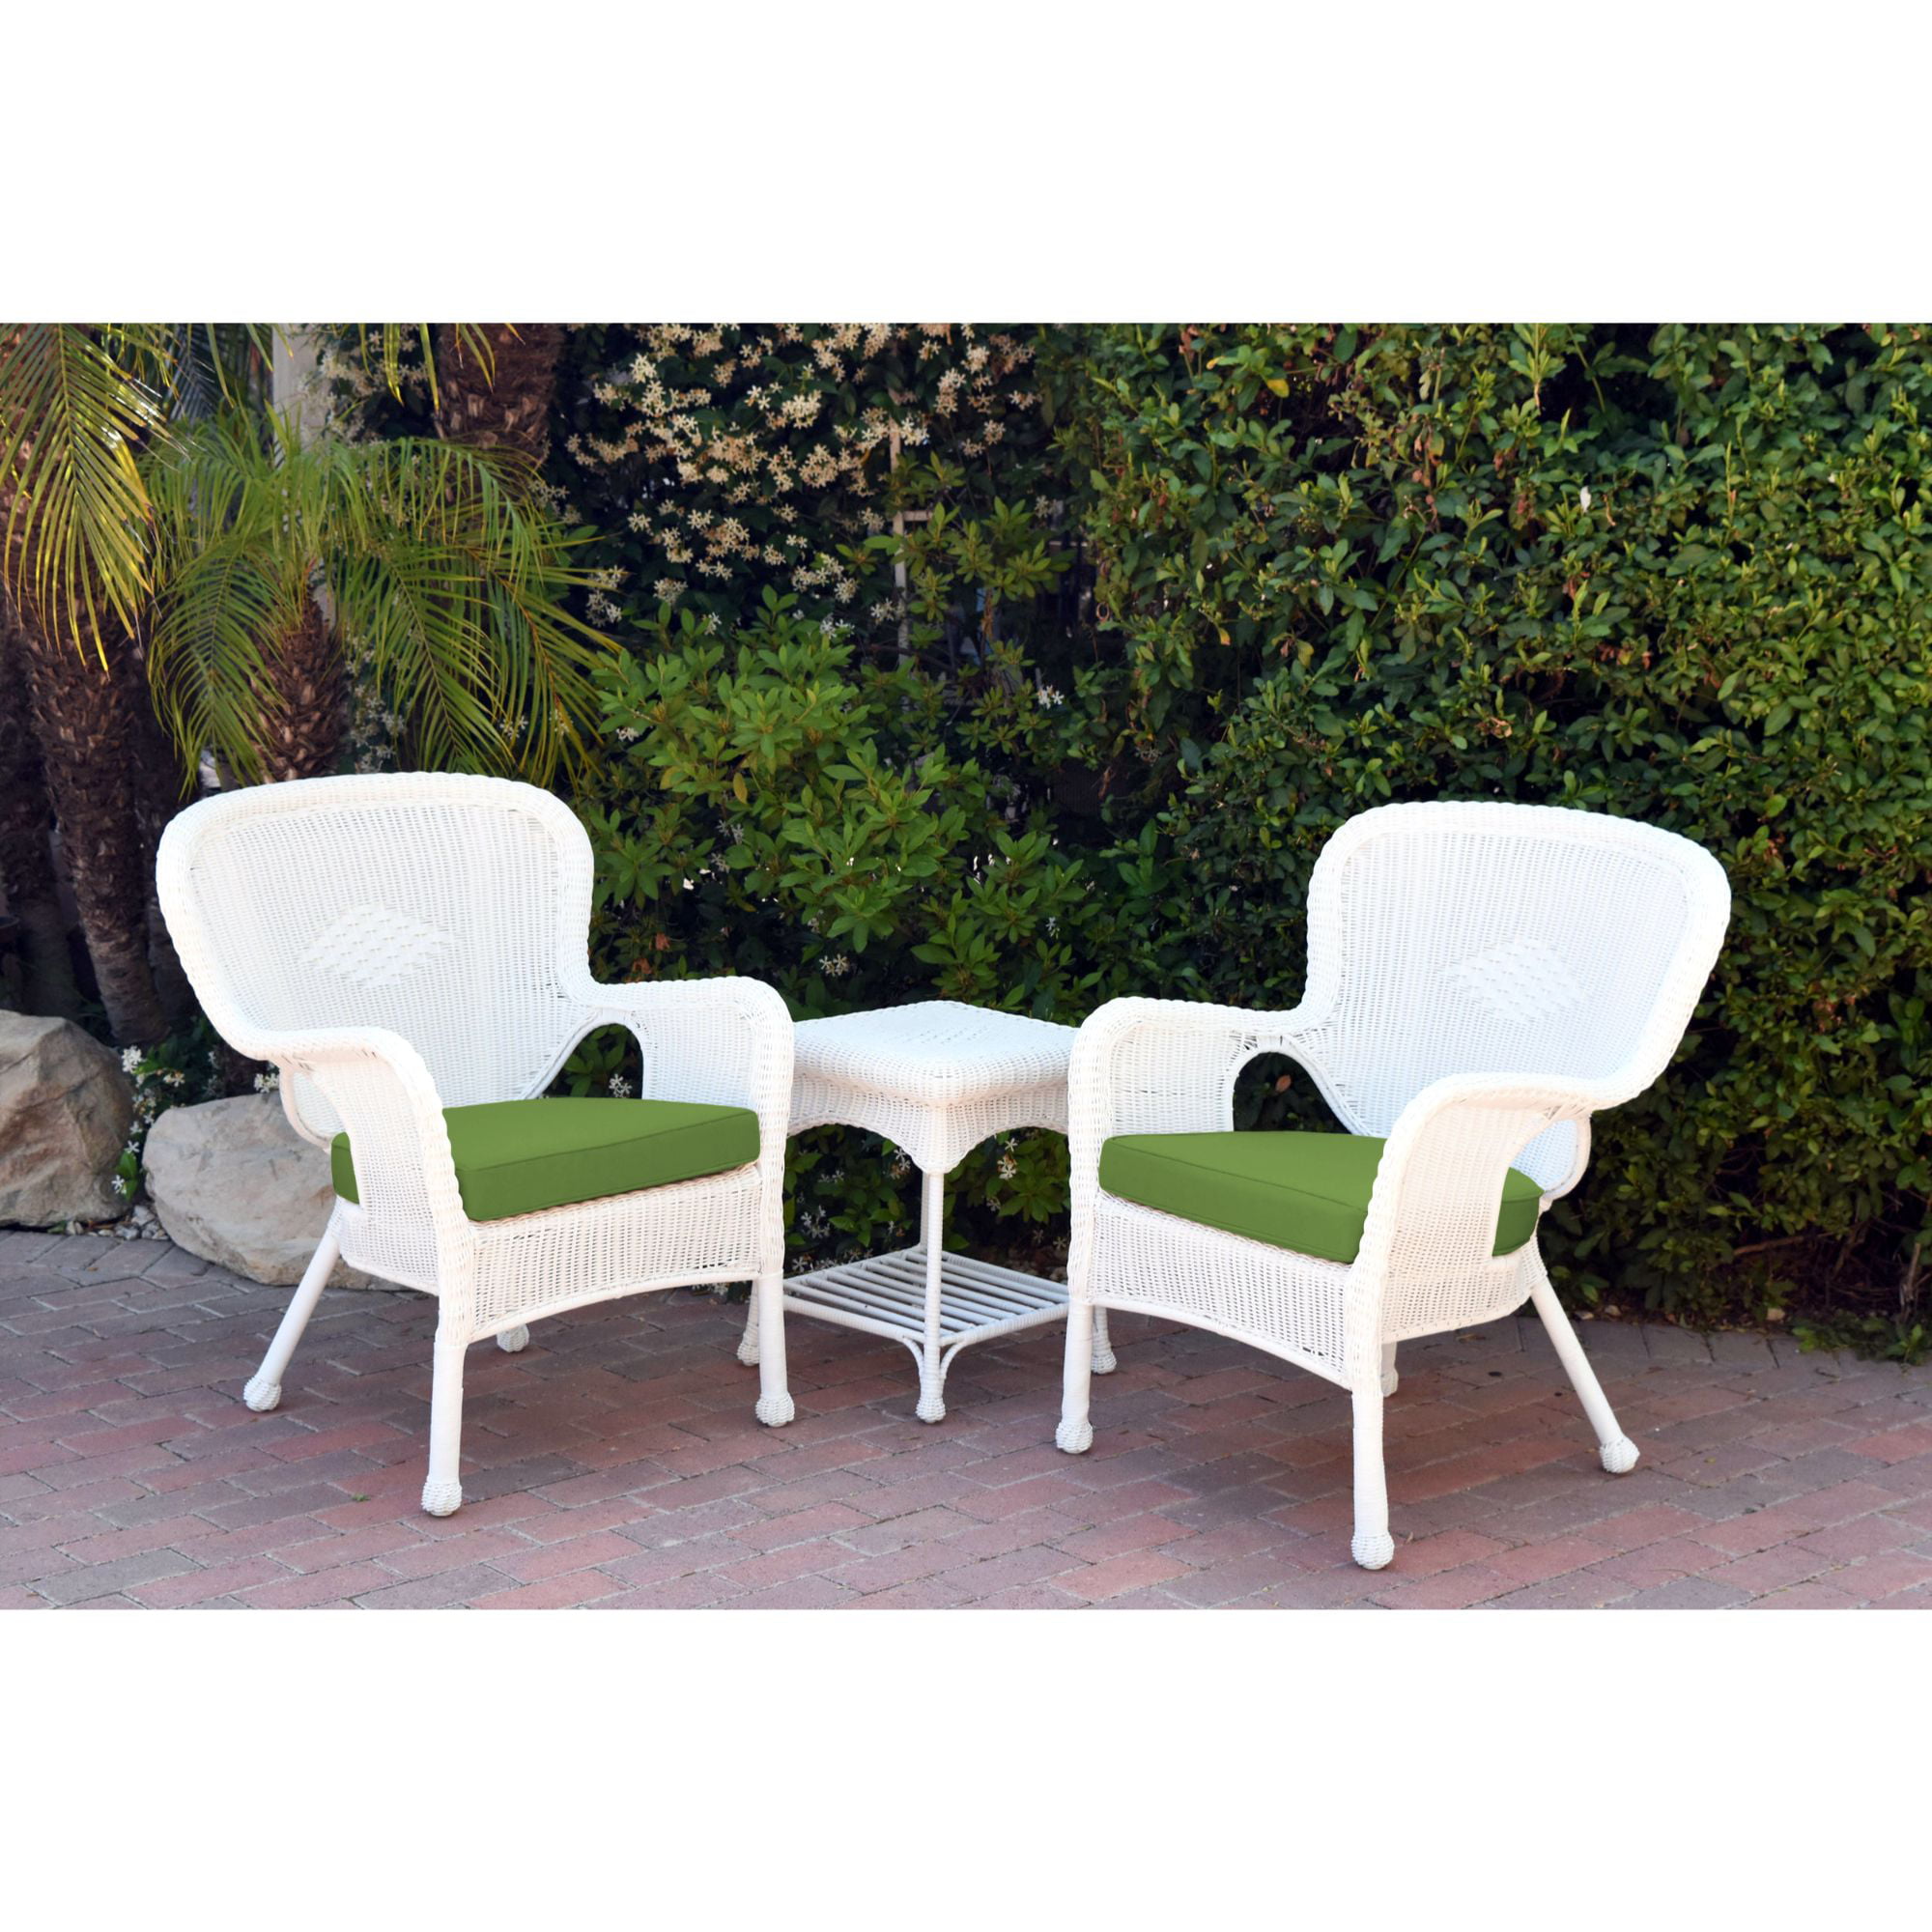 3-Piece White Wicker Outdoor Furniture Patio Conversation Set with